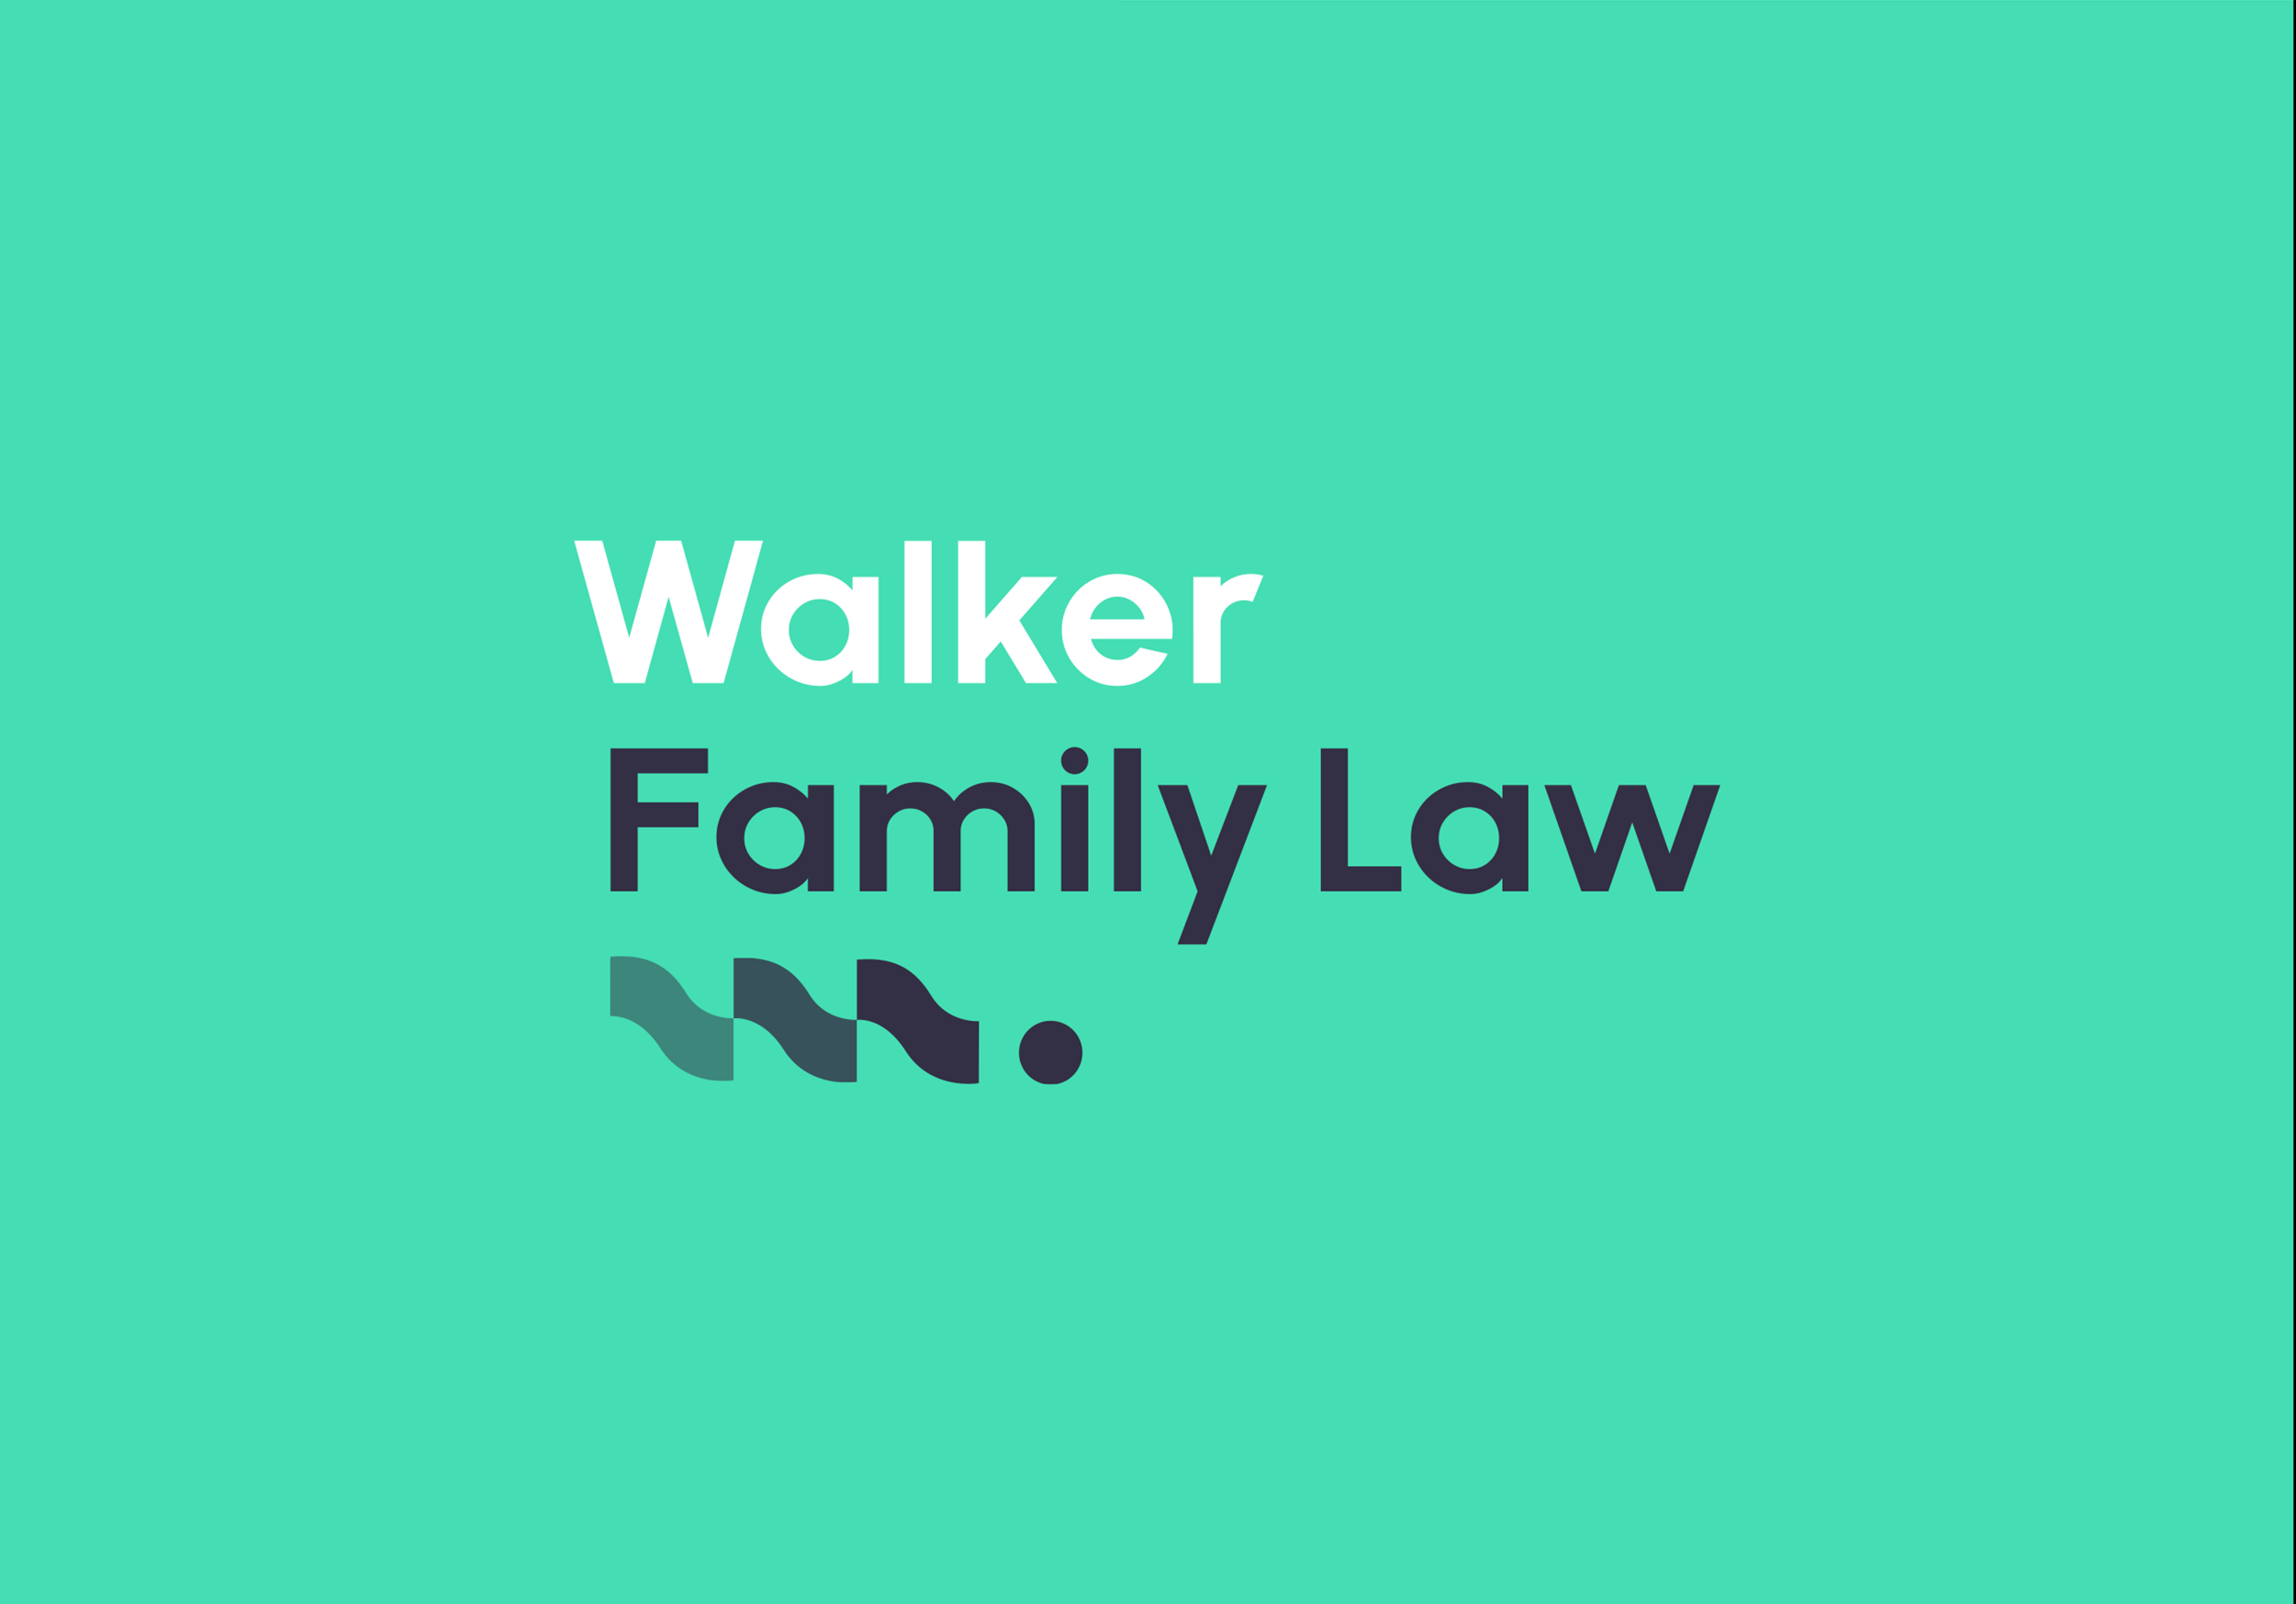 Walker Family Law - Strategy, Digital Marketing, Creative